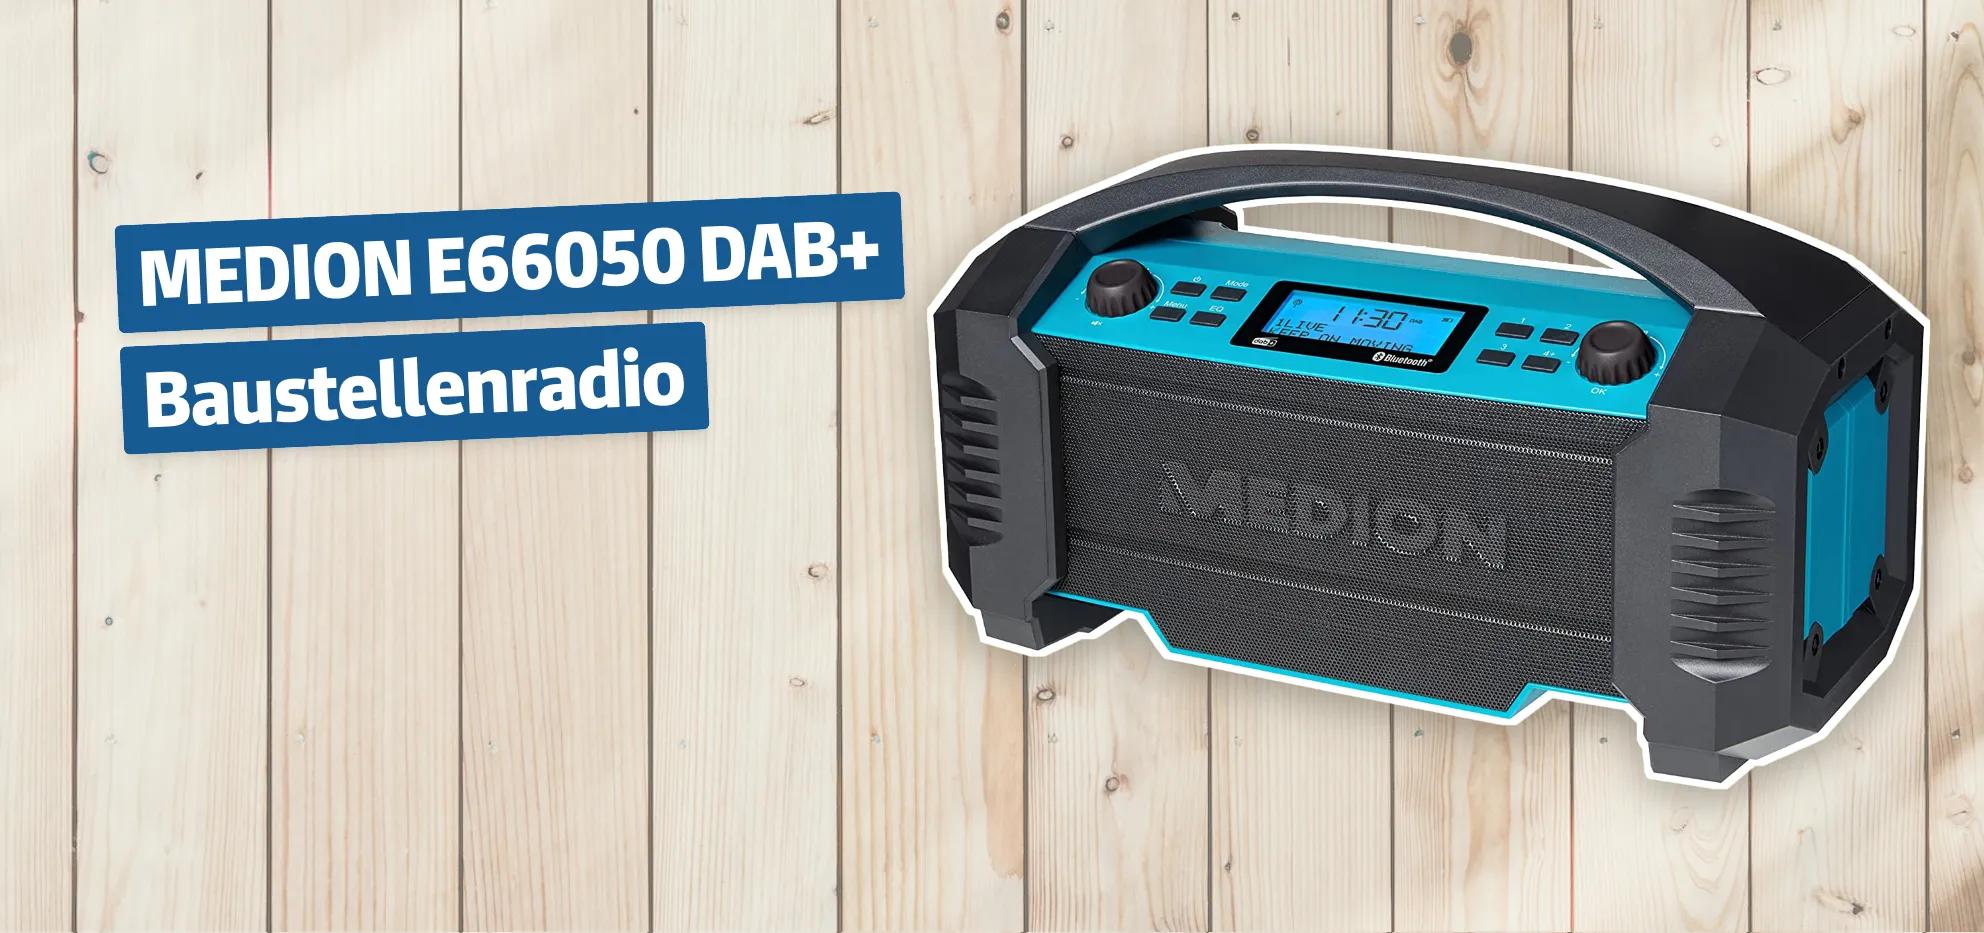 MEDION E66050 DAB+ Baustellenradio